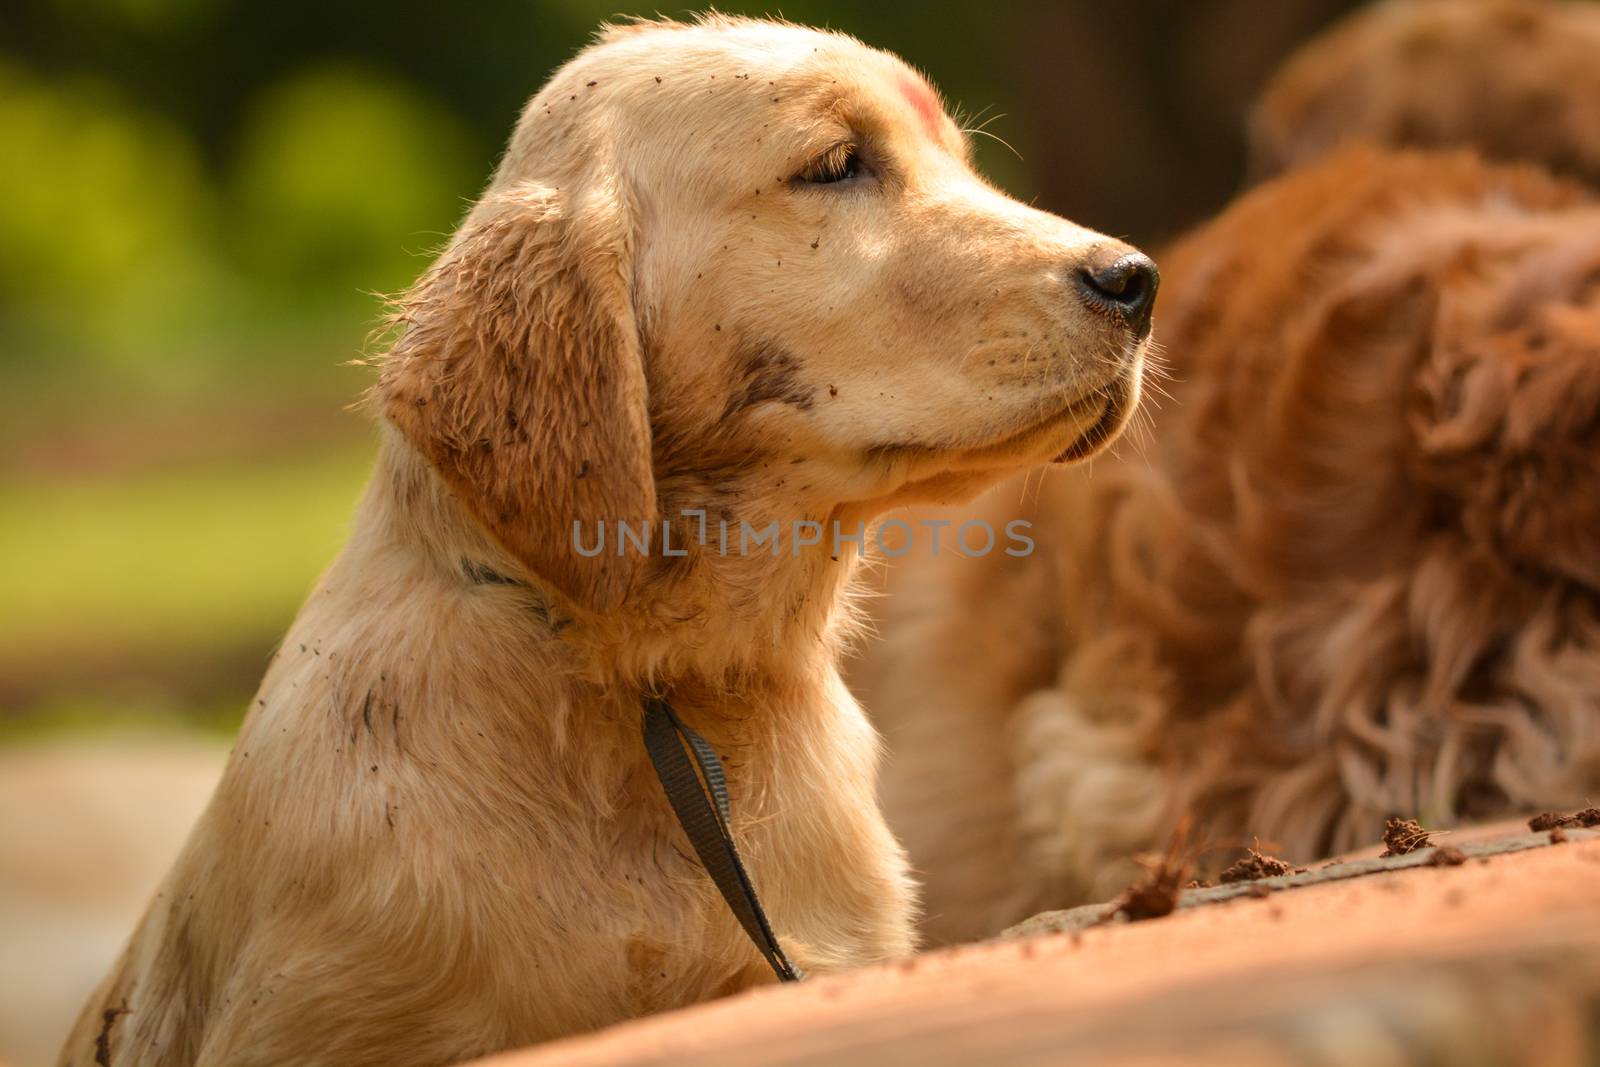 purebred golden retriever dog in park looking something eagerly by lakshmiprasad.maski@gmai.com